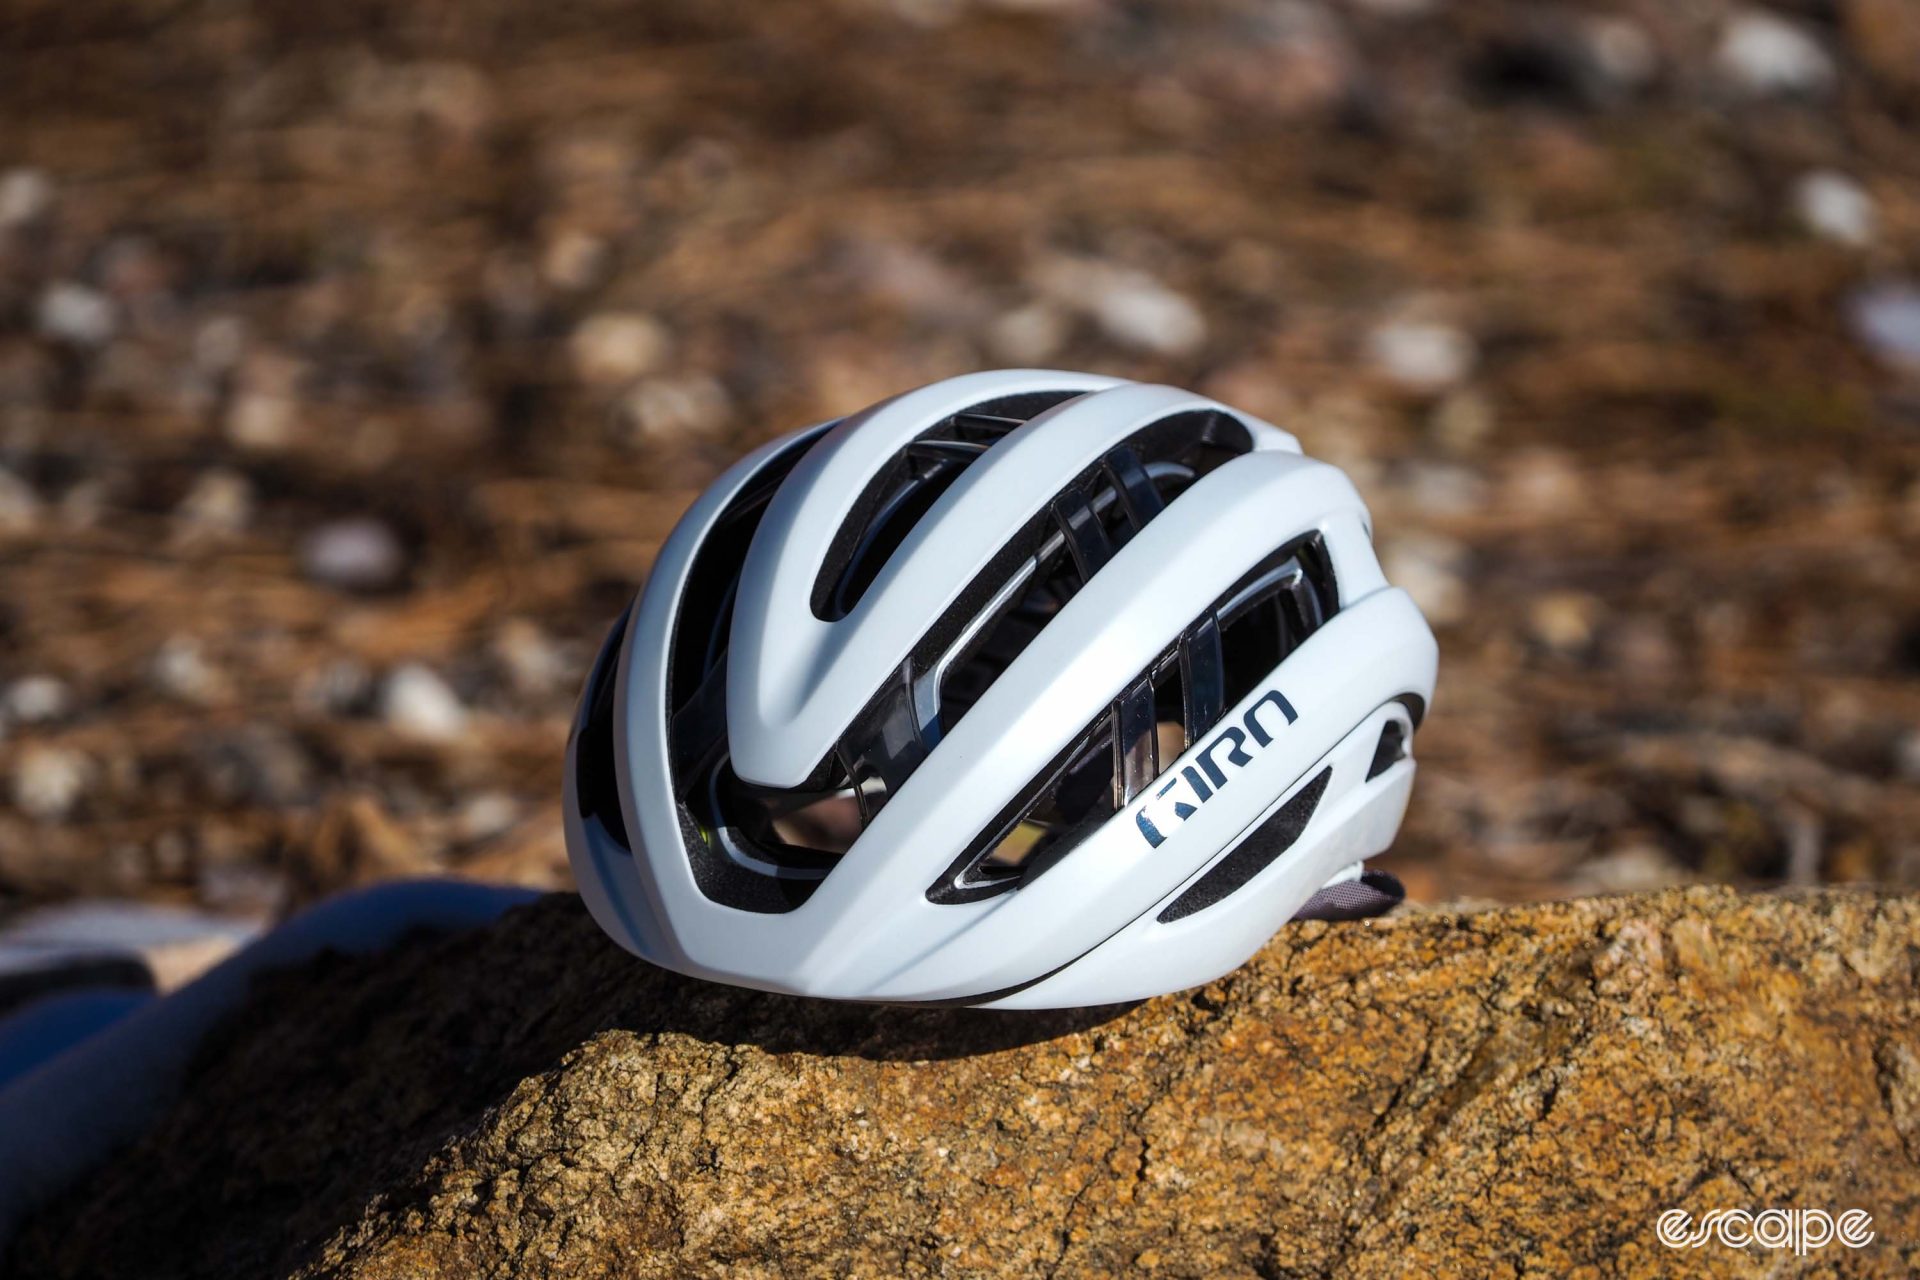 Giro Aries Spherical helmet in white